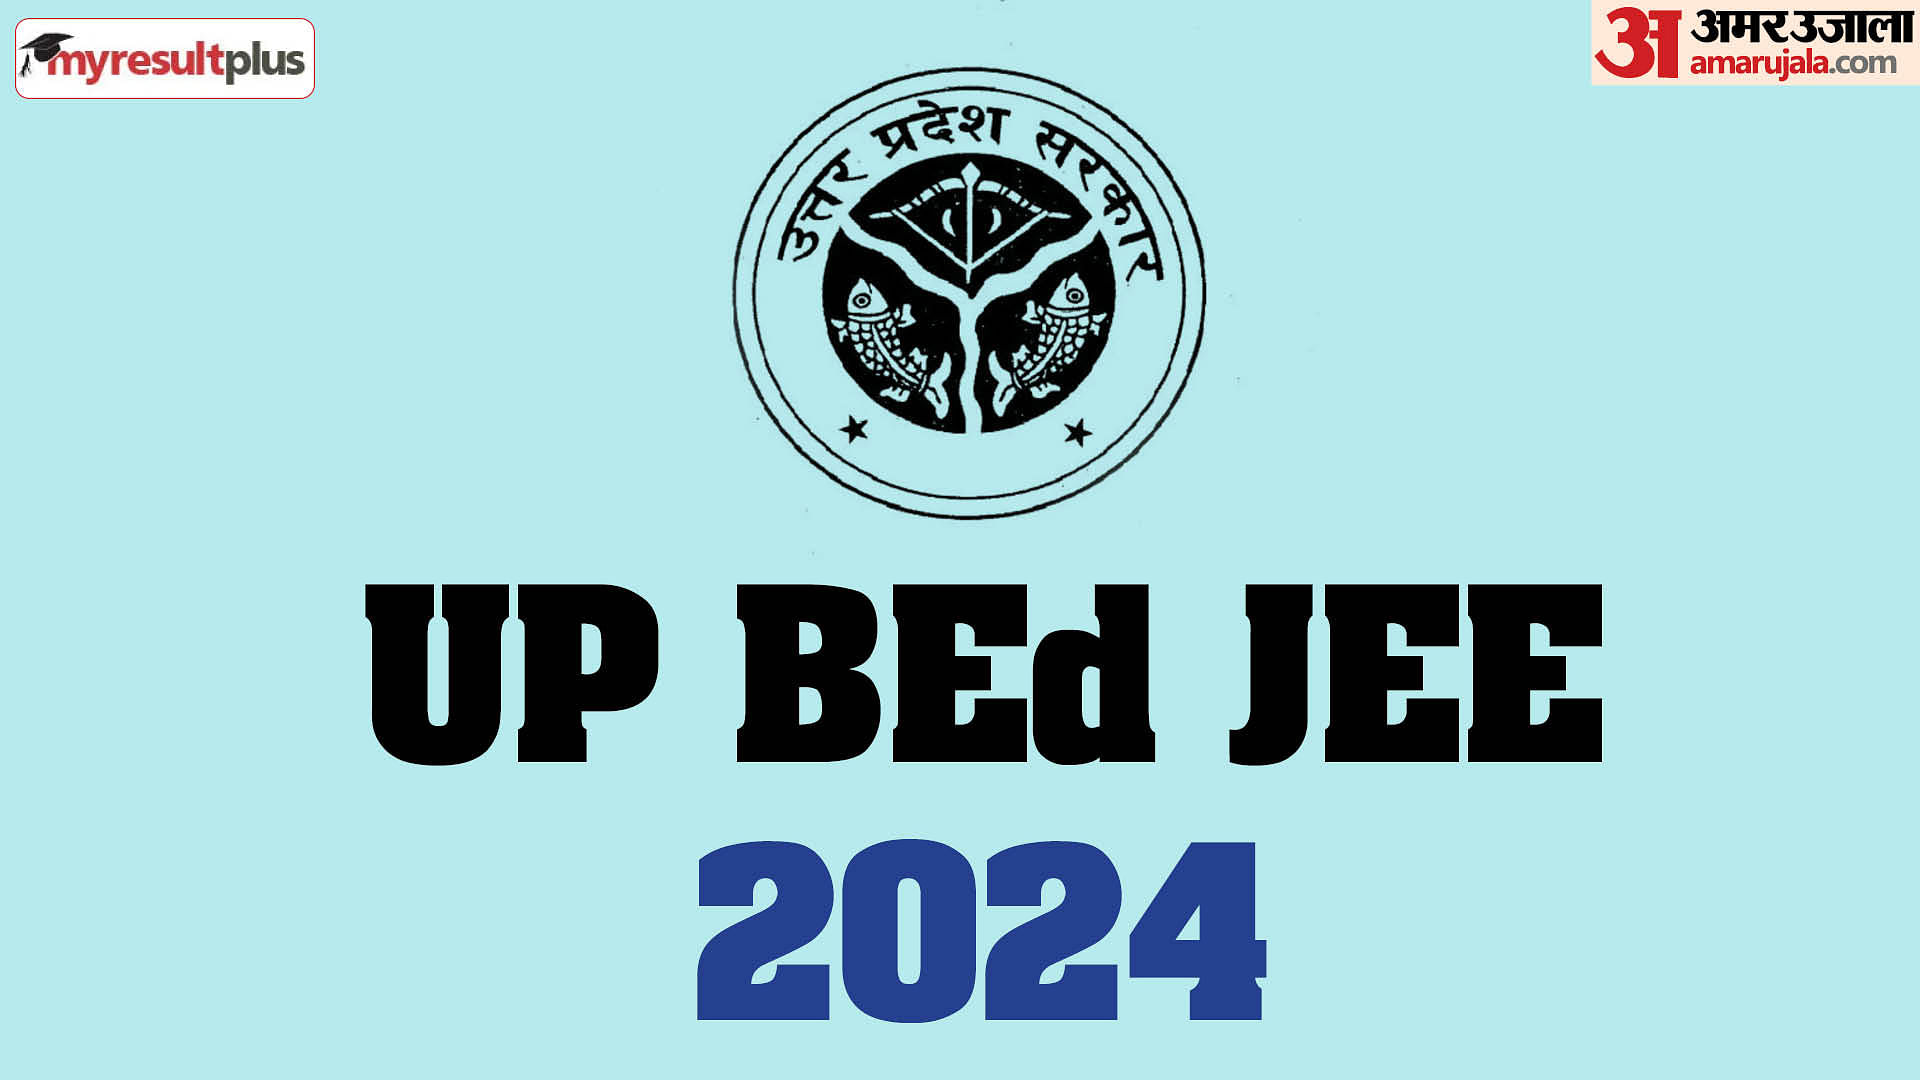 UP BEd JEE 2024 registration deadline extended, apply now at bujhansi.ac.in